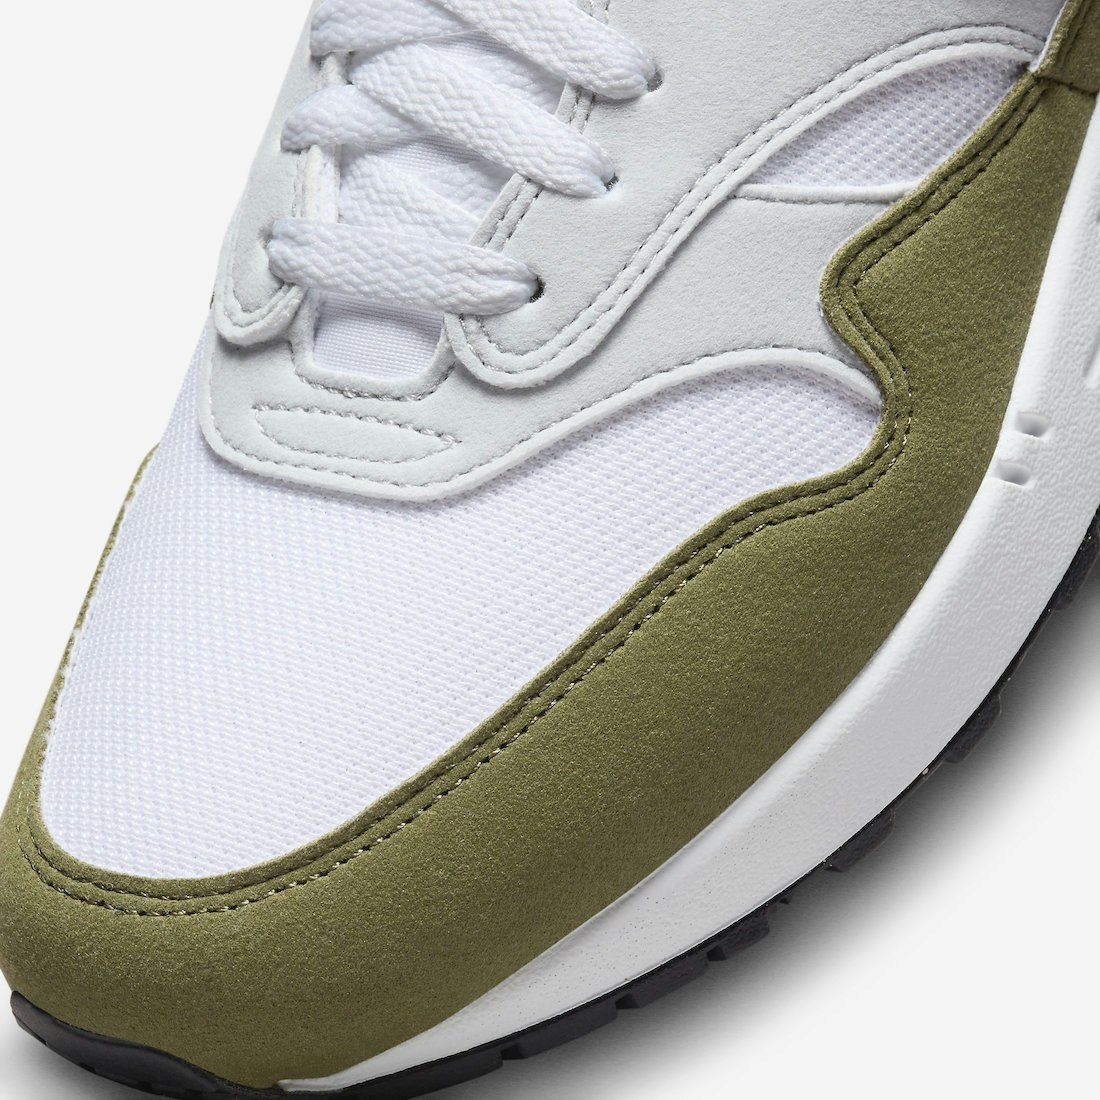 Nike Air Max 1 "Medium Olive"